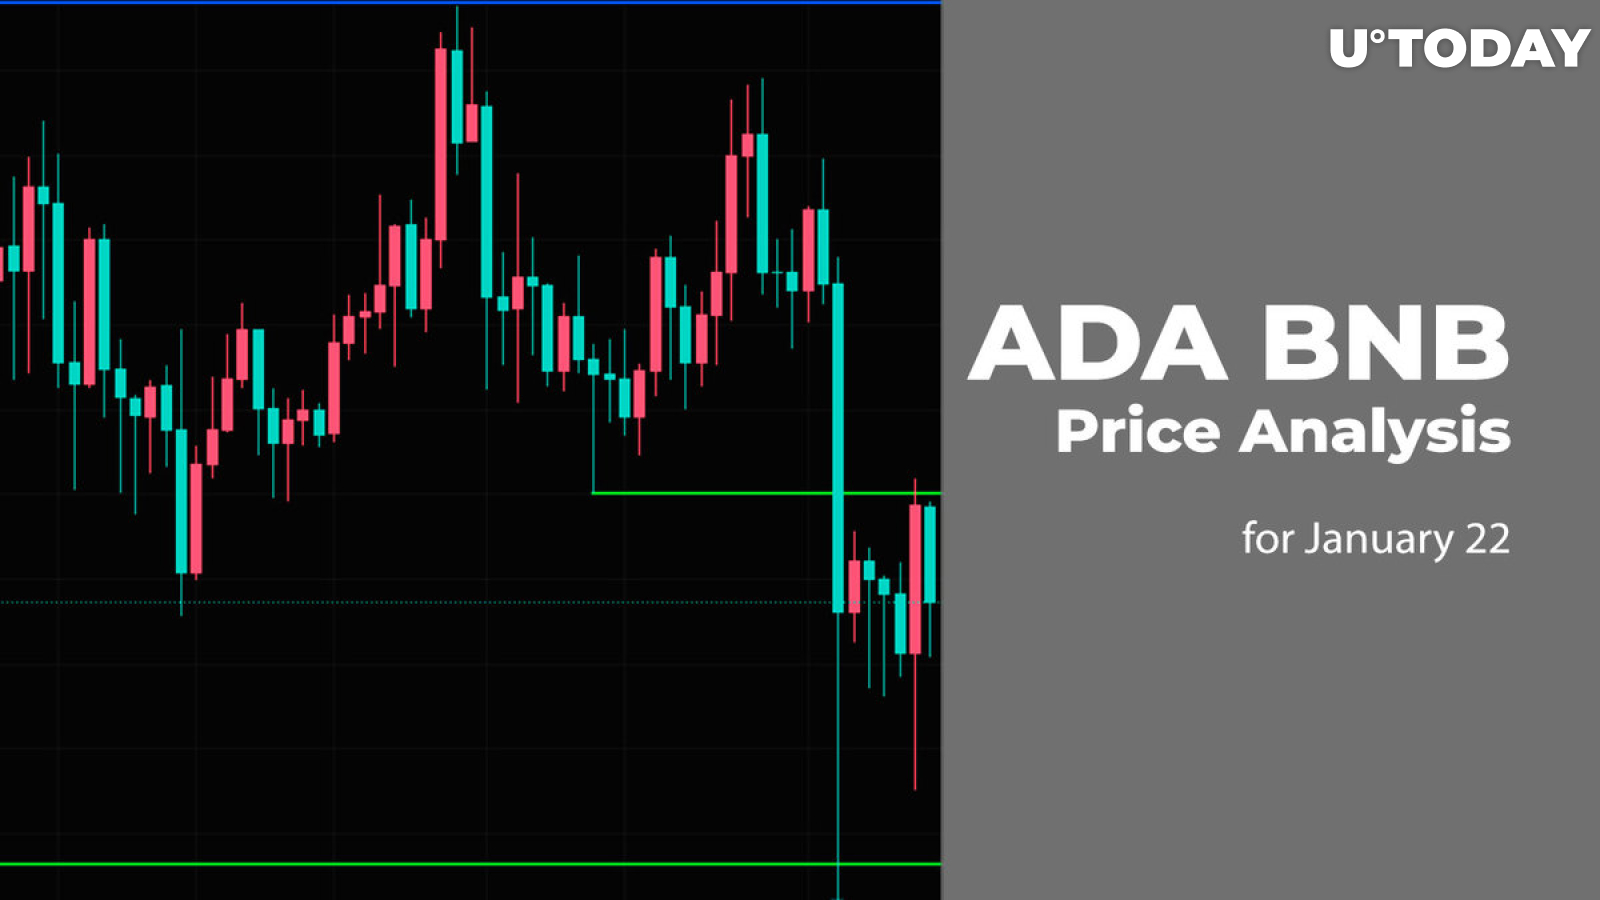 ADA and BNB Price Analysis for January 22